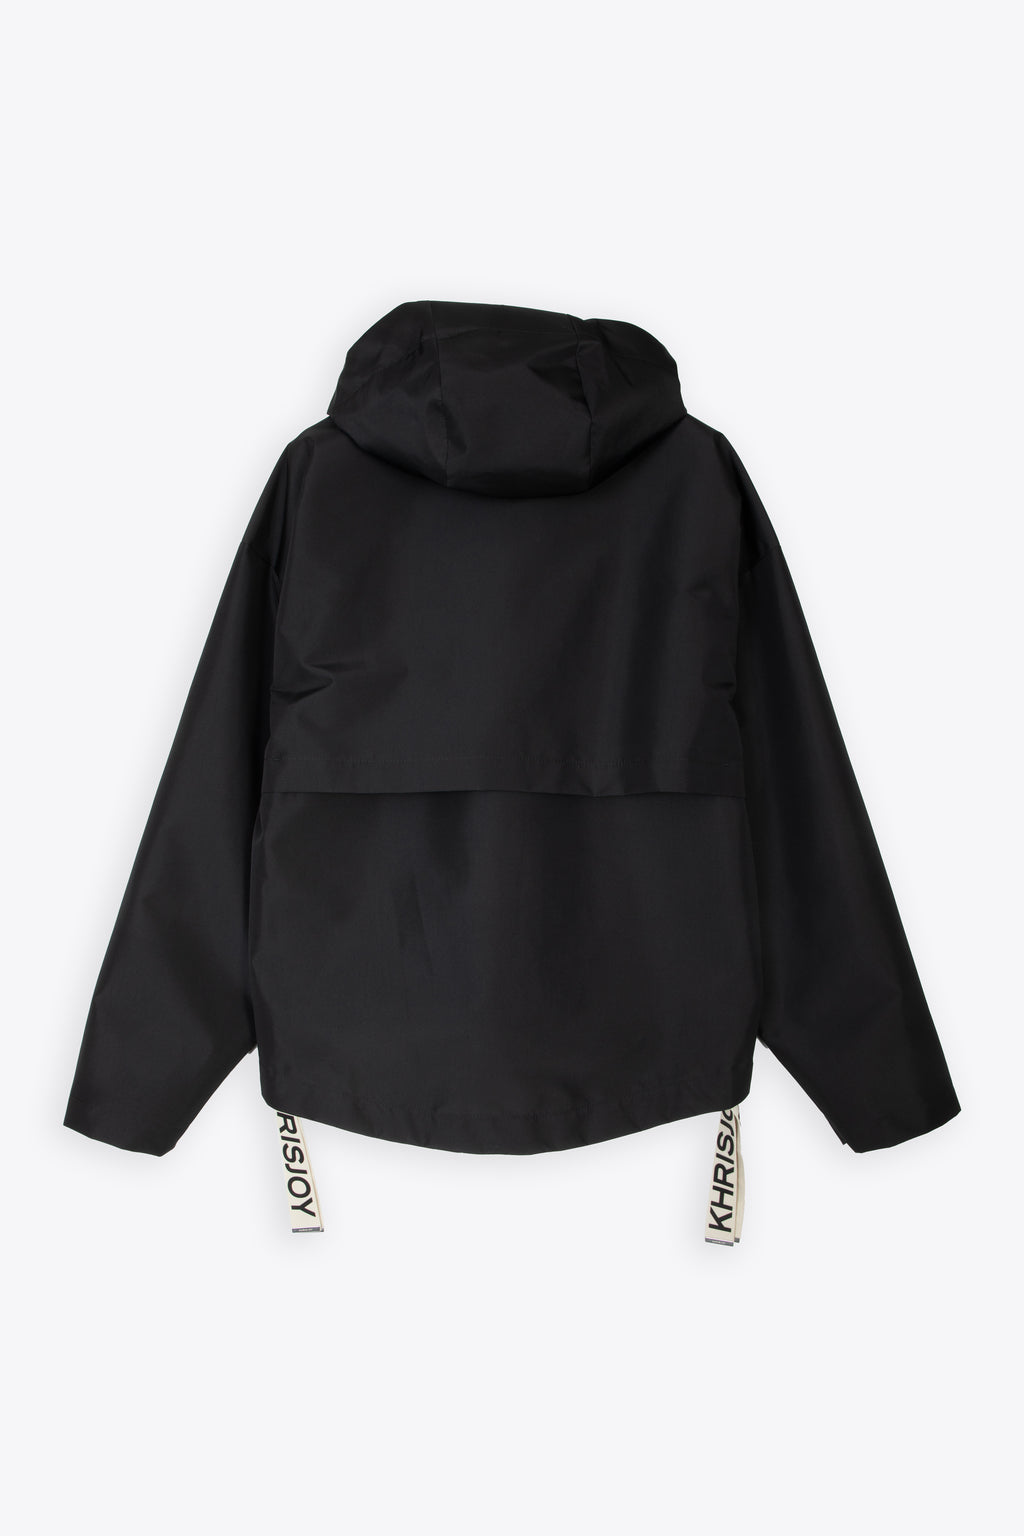 alt-image__Black-nylon-windproof-hooded-jacket---Shell-Windbreaker